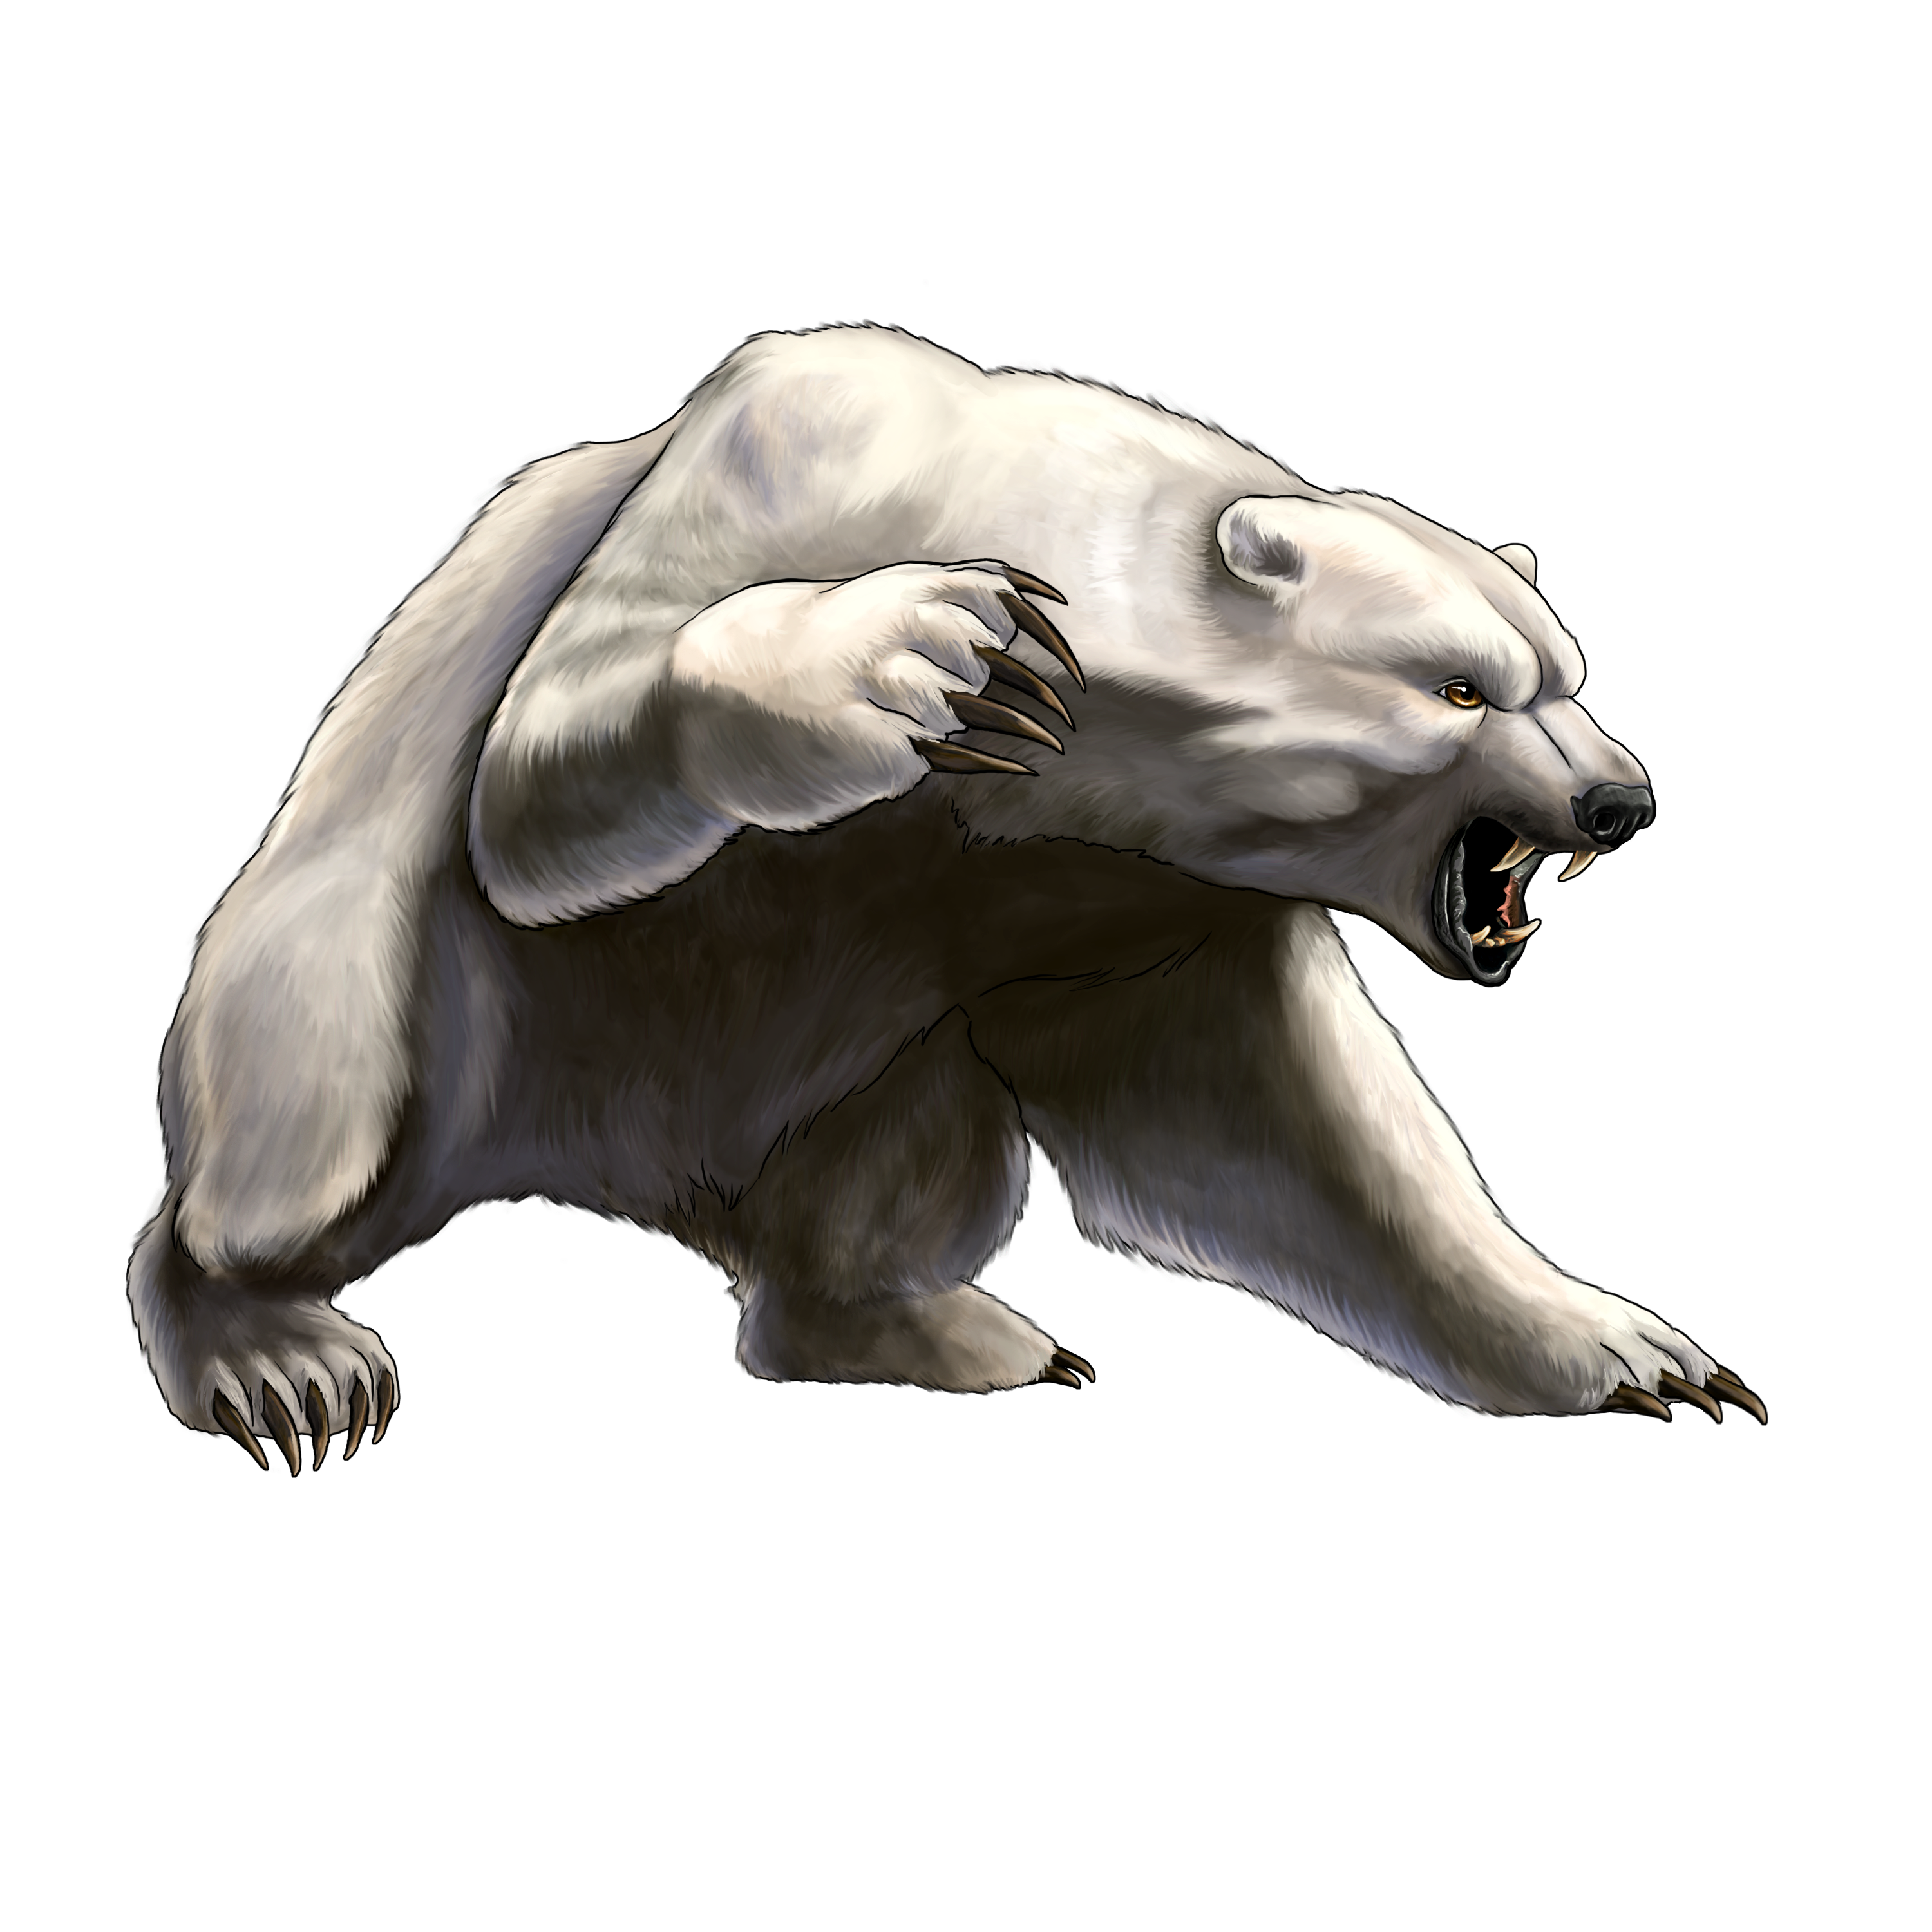 Orso bianco arrabbiato